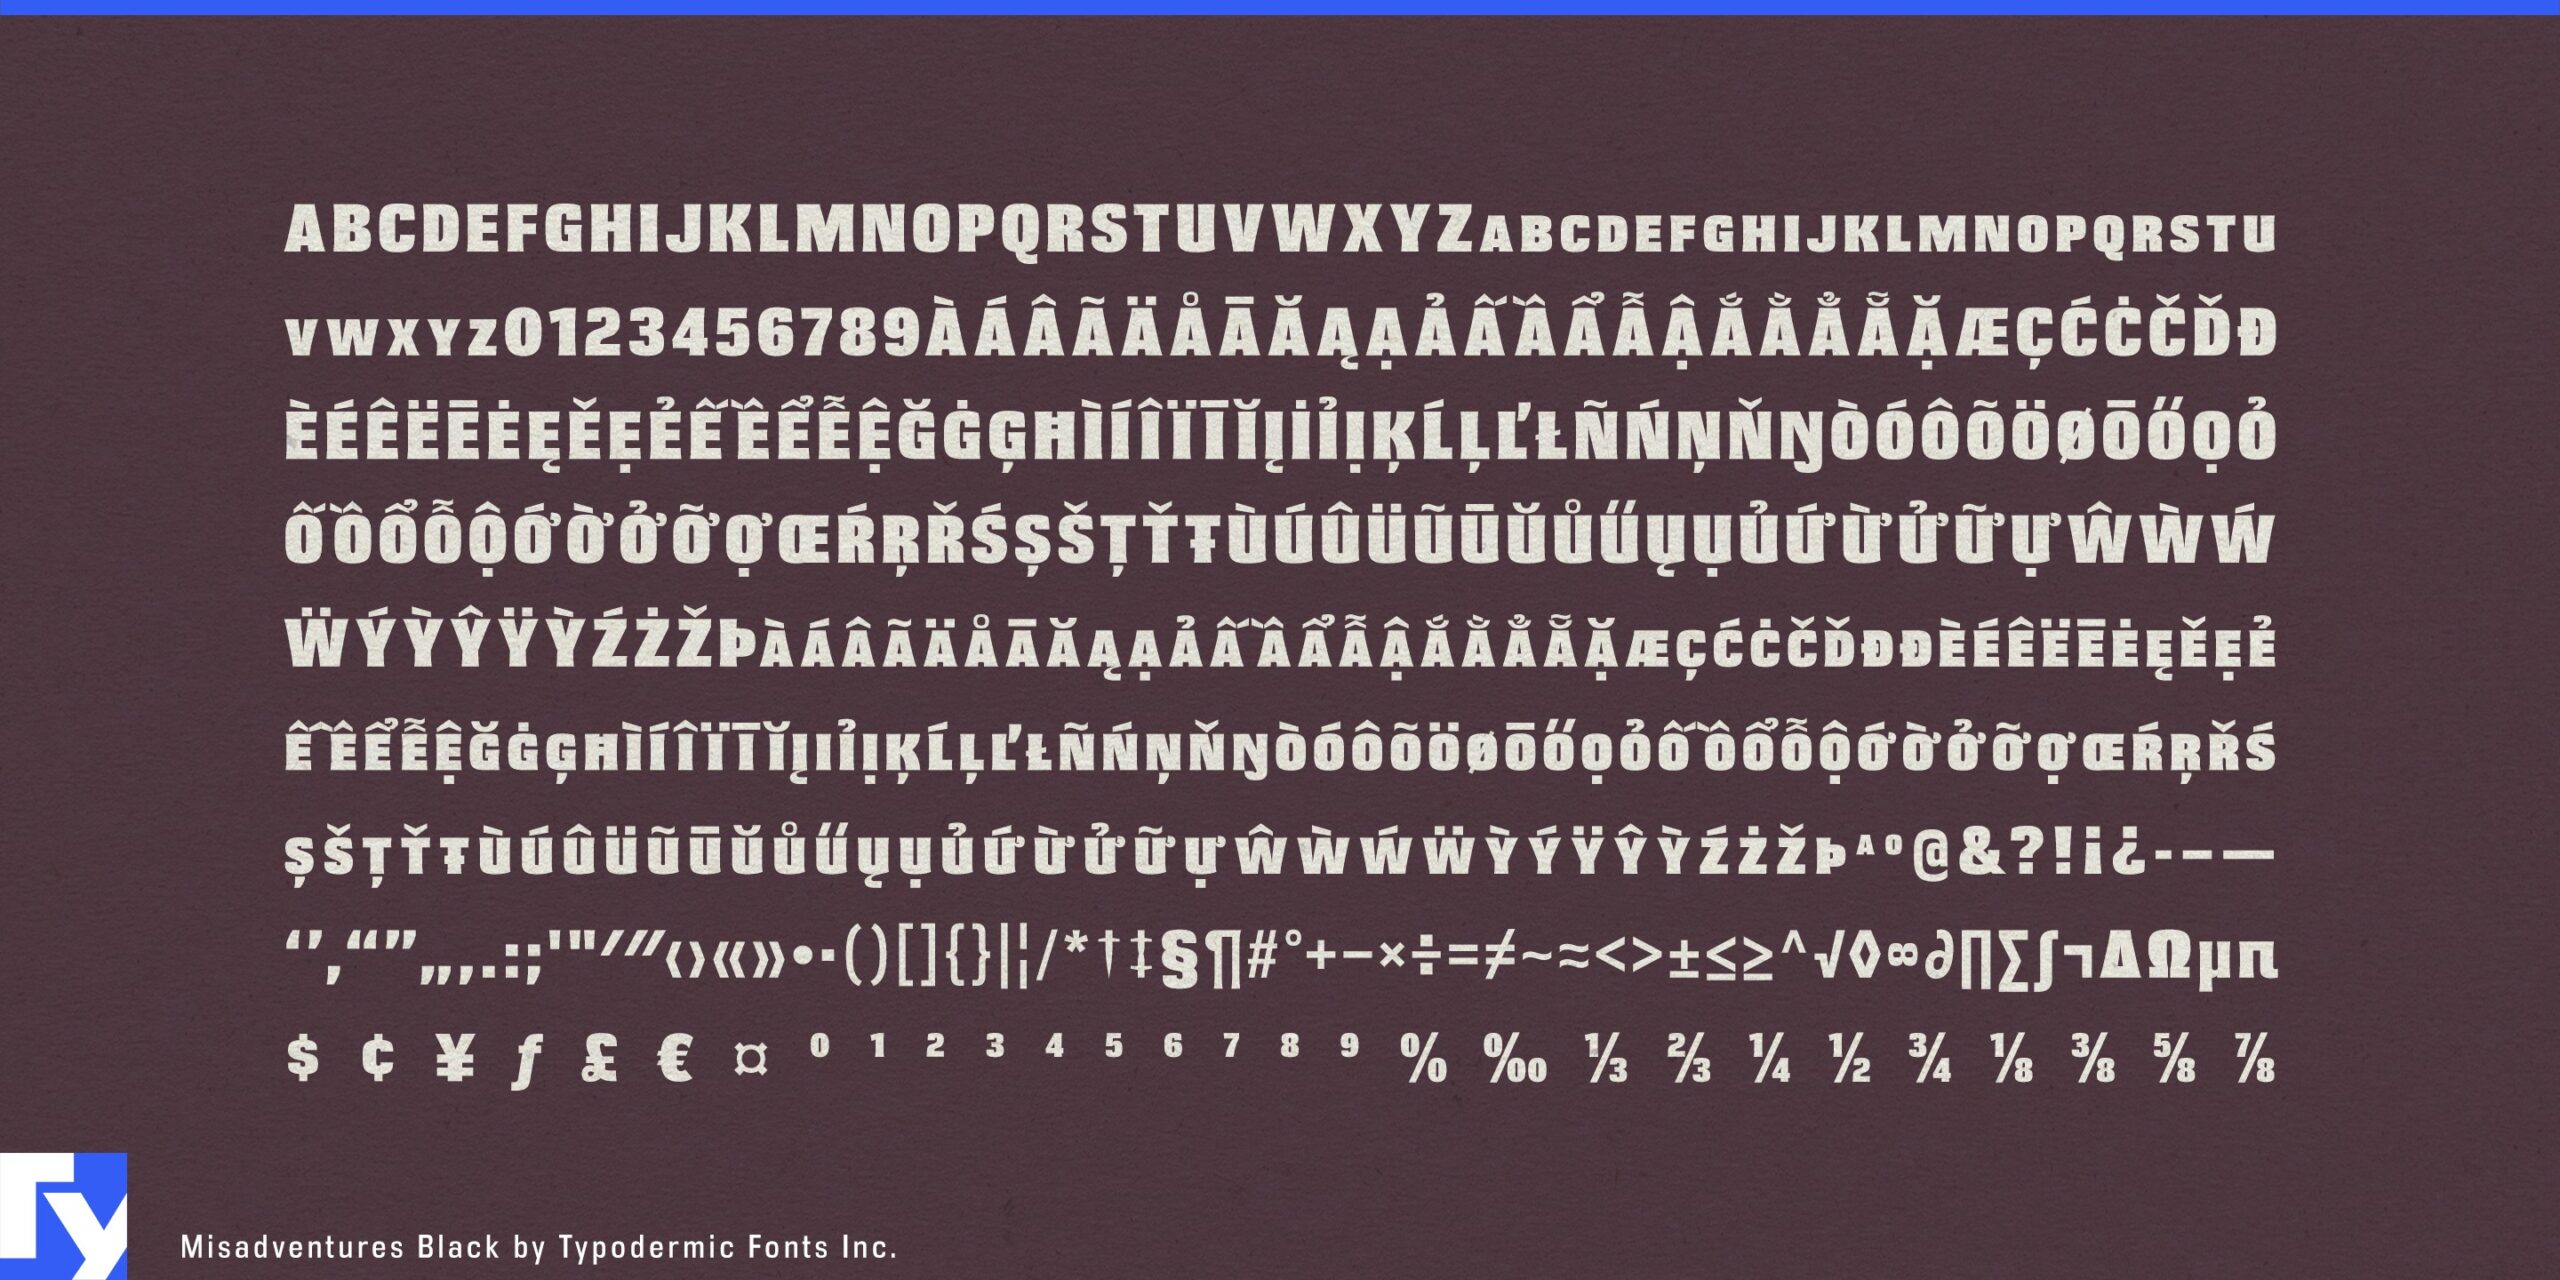 Misadventures Typeface: All Brawn, No Nonsense for Impactful Designs